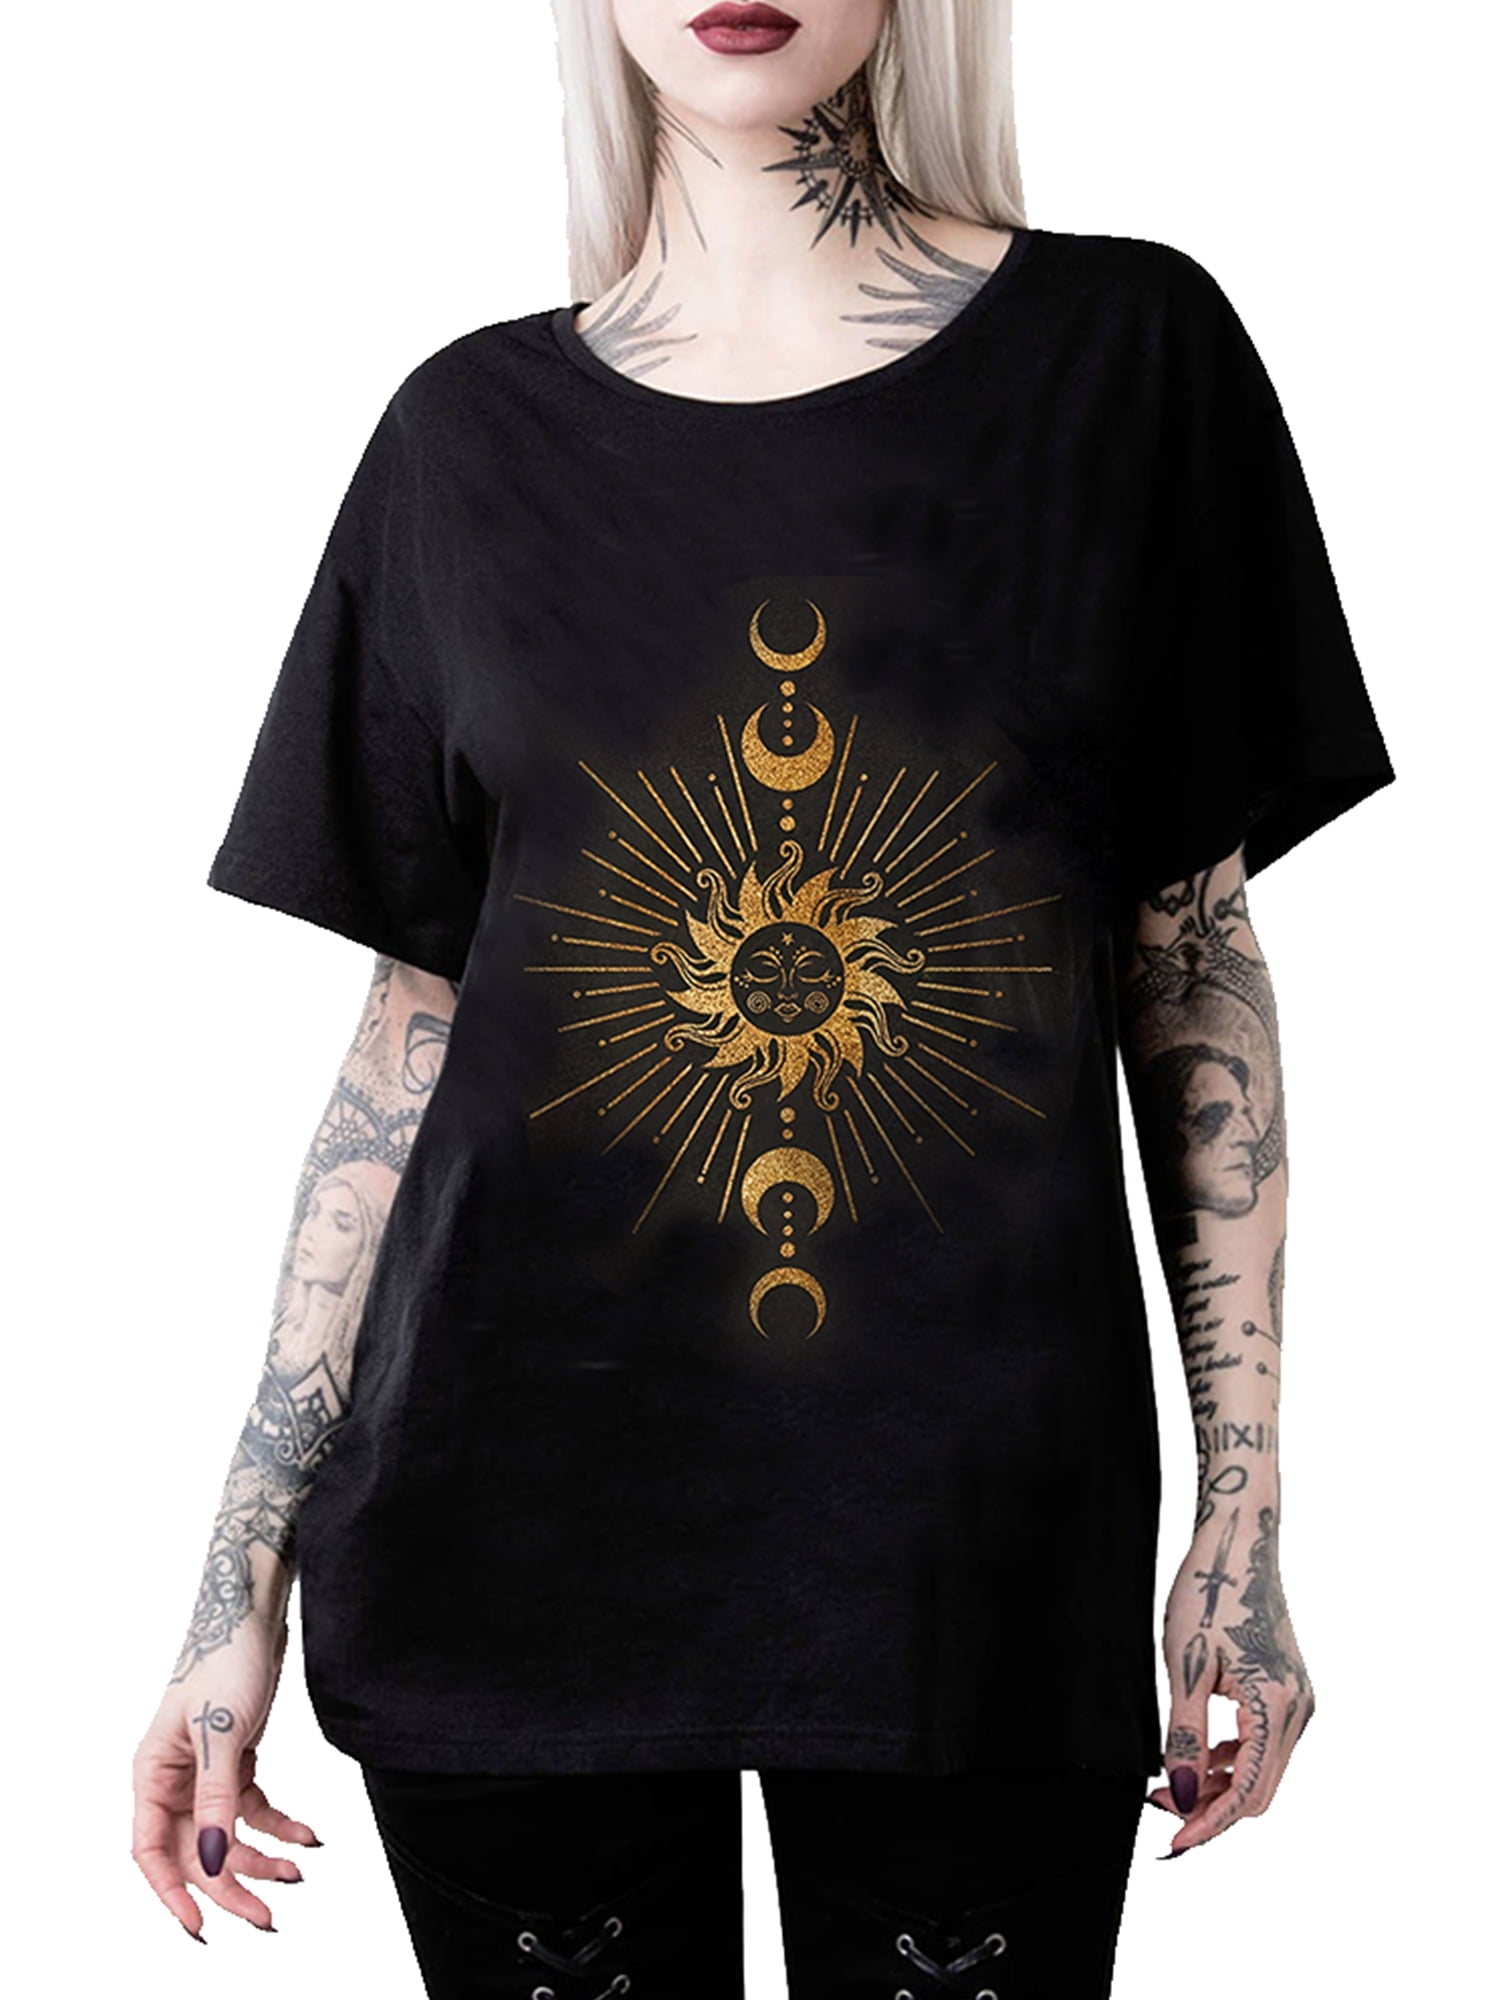 Skksst Womens Short Sleeve Round Neck T Shirt Gothic Darkness Blouse Tops